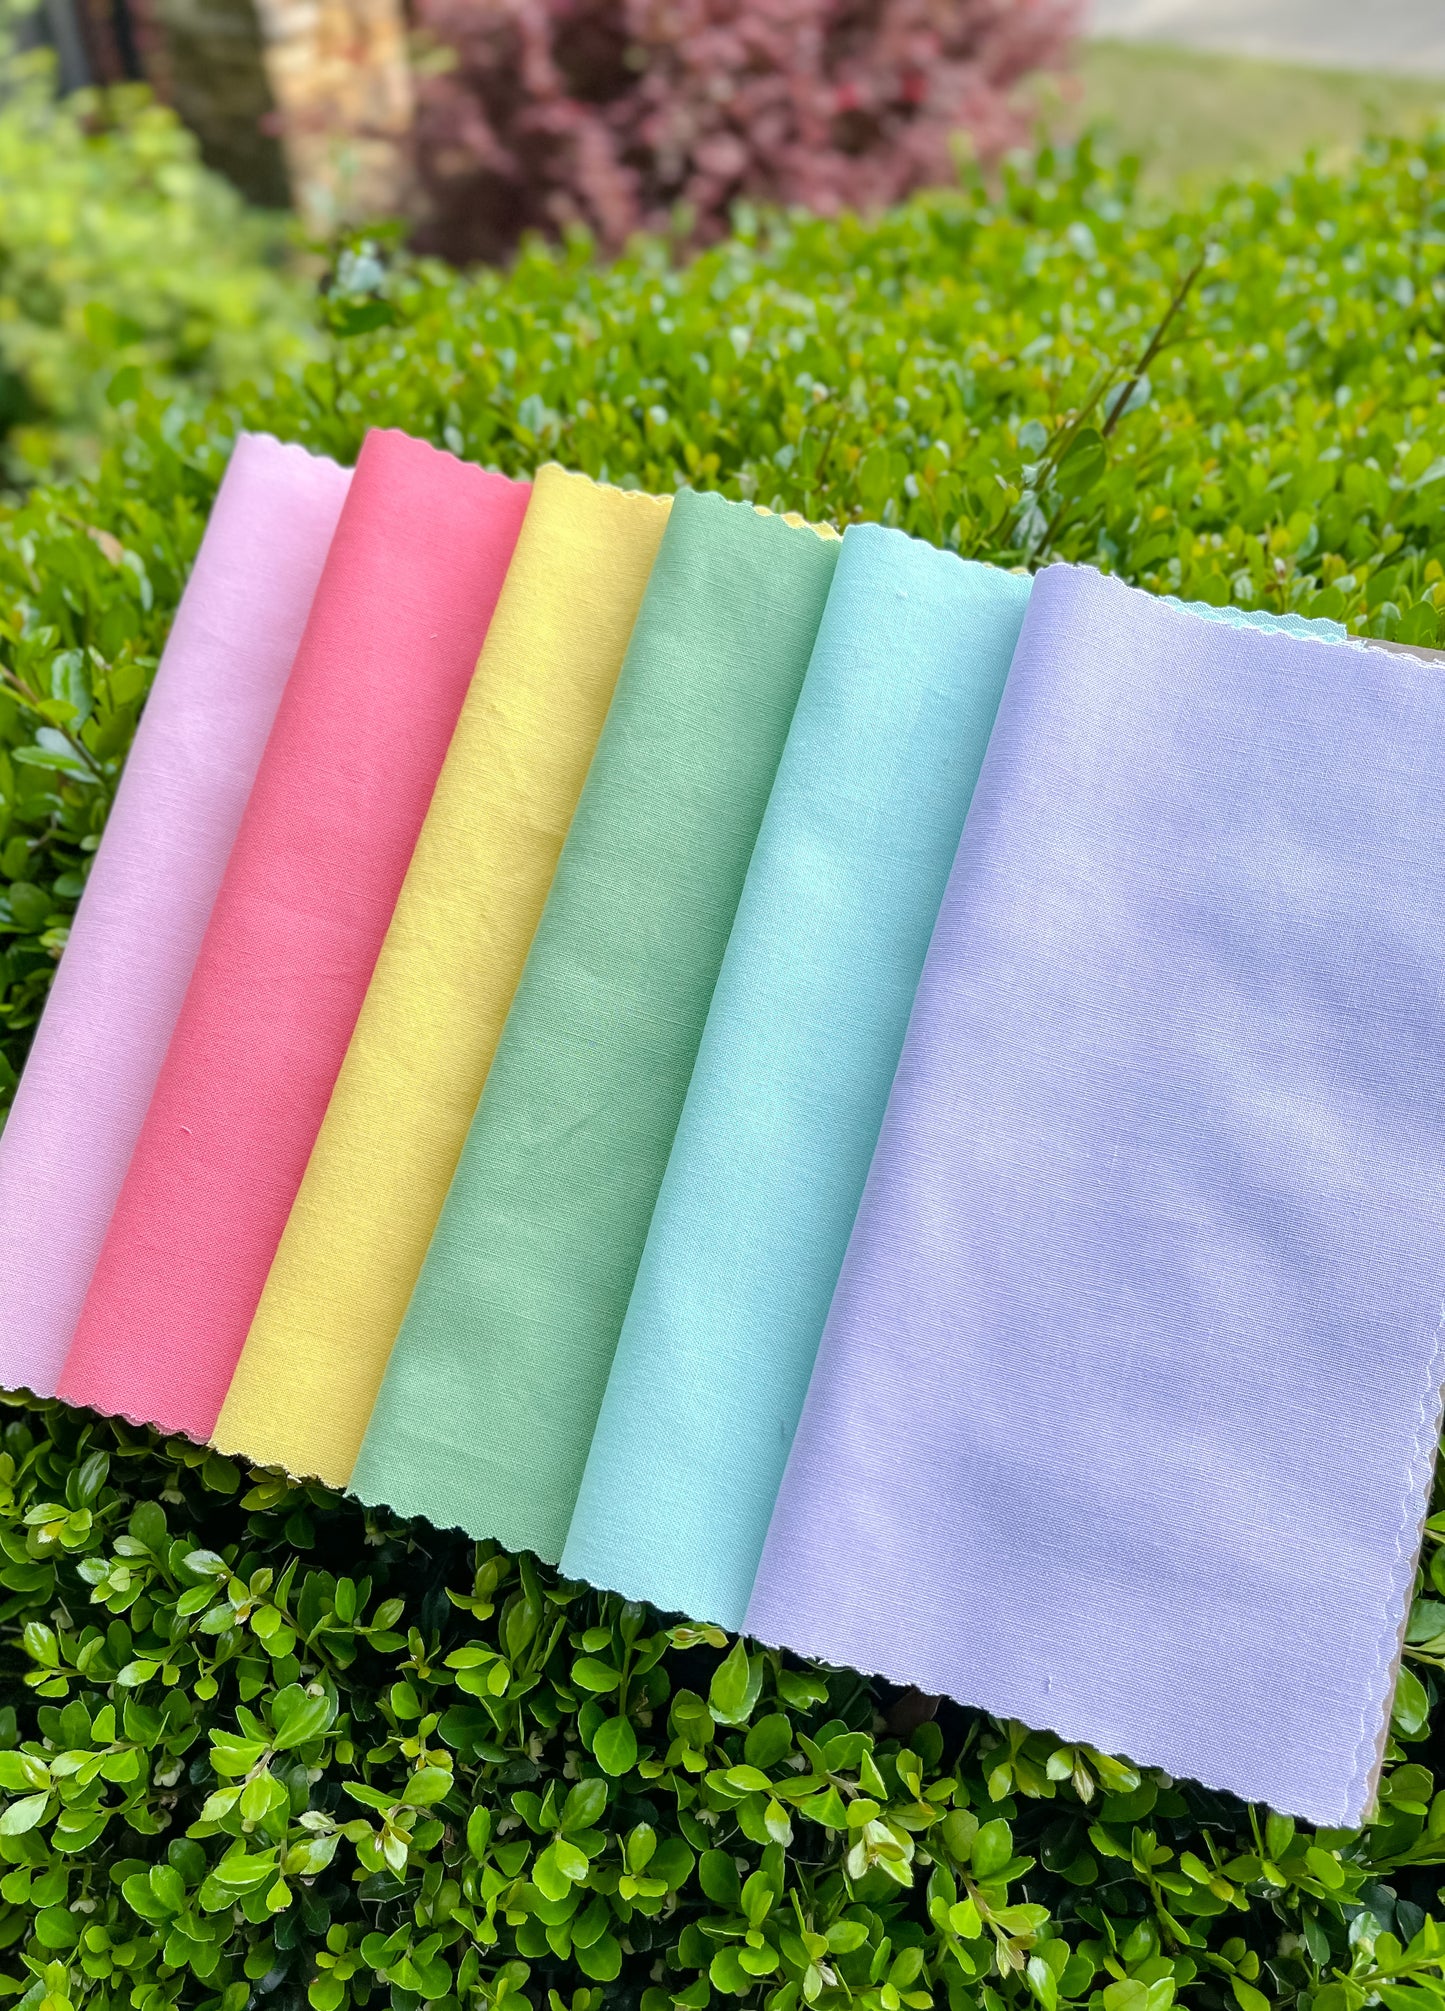 Embroidery Fabric Square Sample Packs - Kona Cotton Fabric, Linen Blend Fabric, Fabric Squares